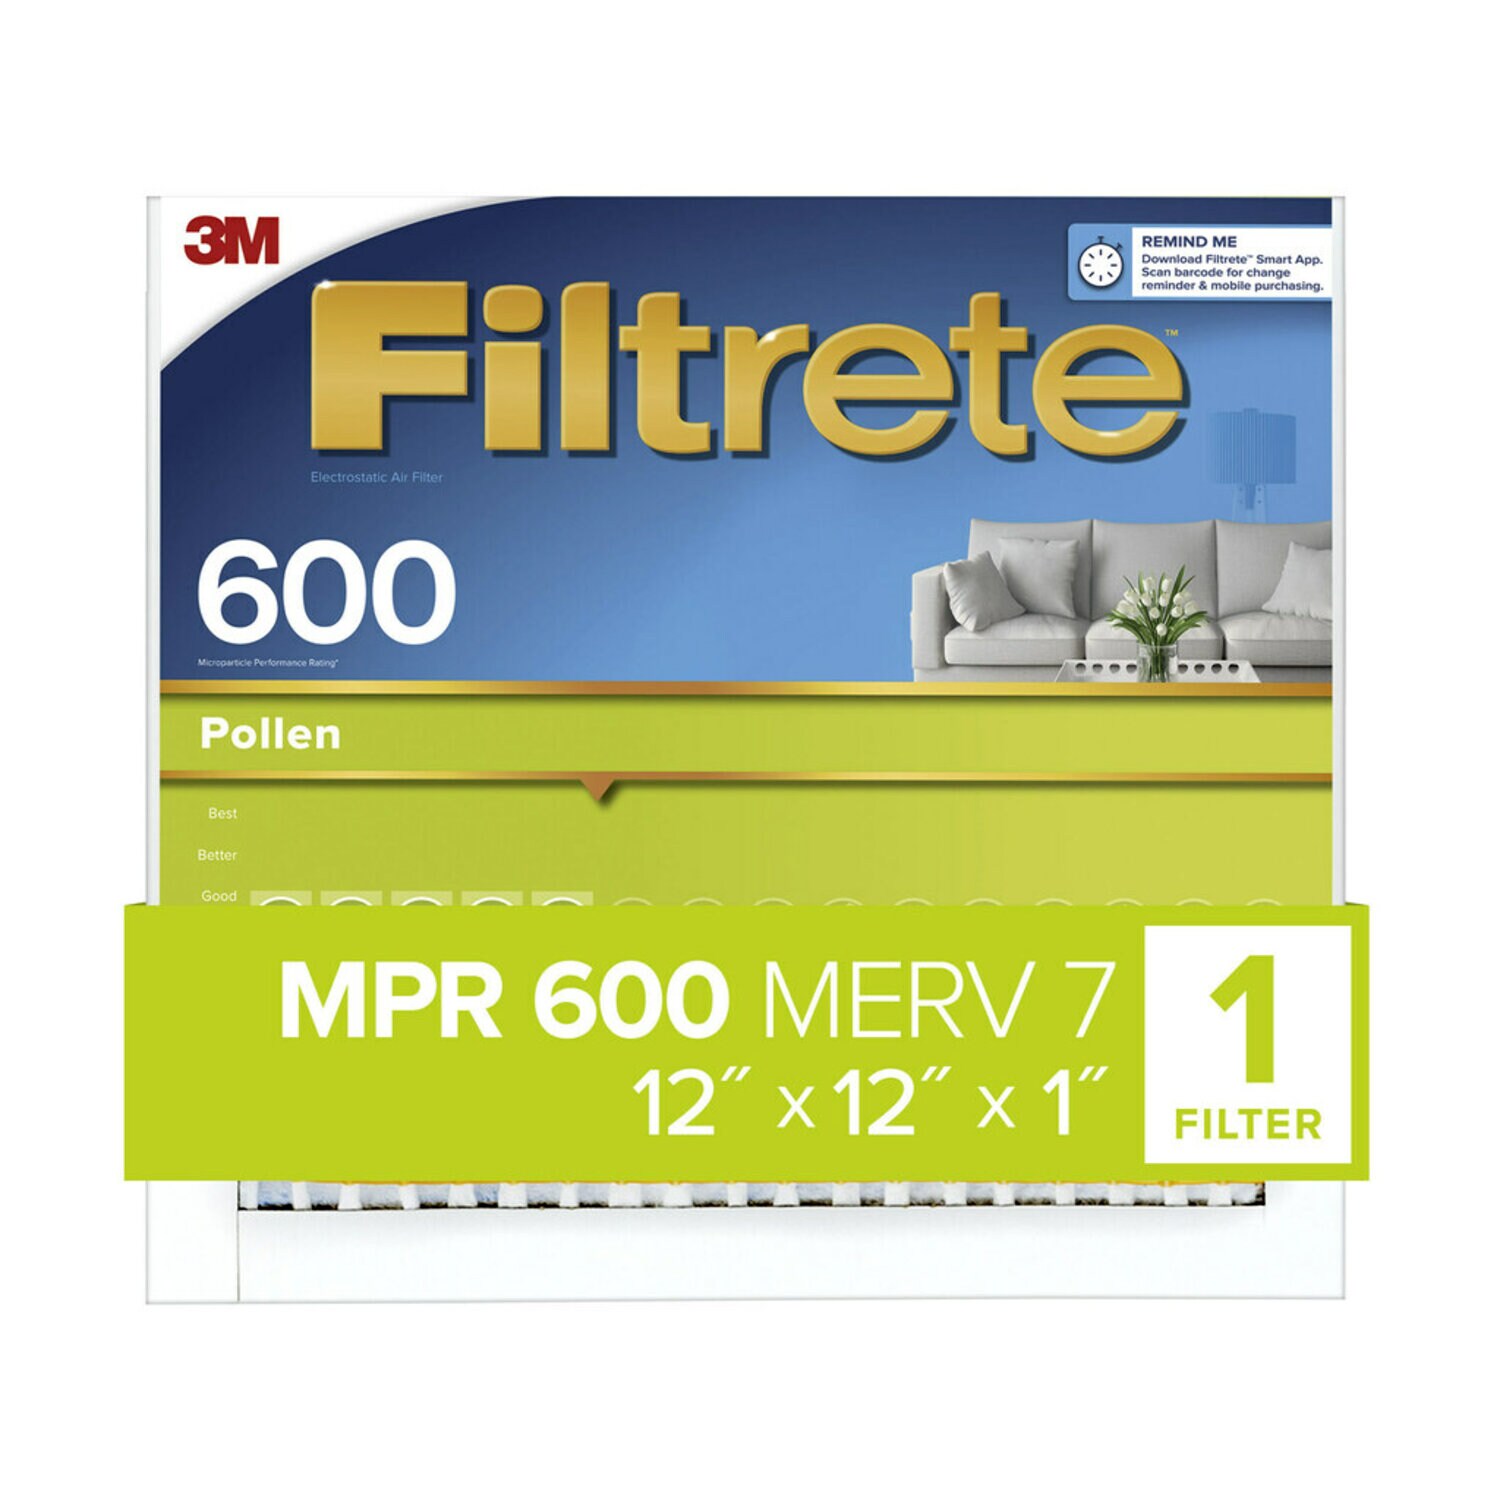 7100268565 - Filtrete Electrostatic Air Filter 600 MPR 9880DC-4, 12 in x 12 in x 1 (30.4 cm x 30.4 cm x 2.5 cm)